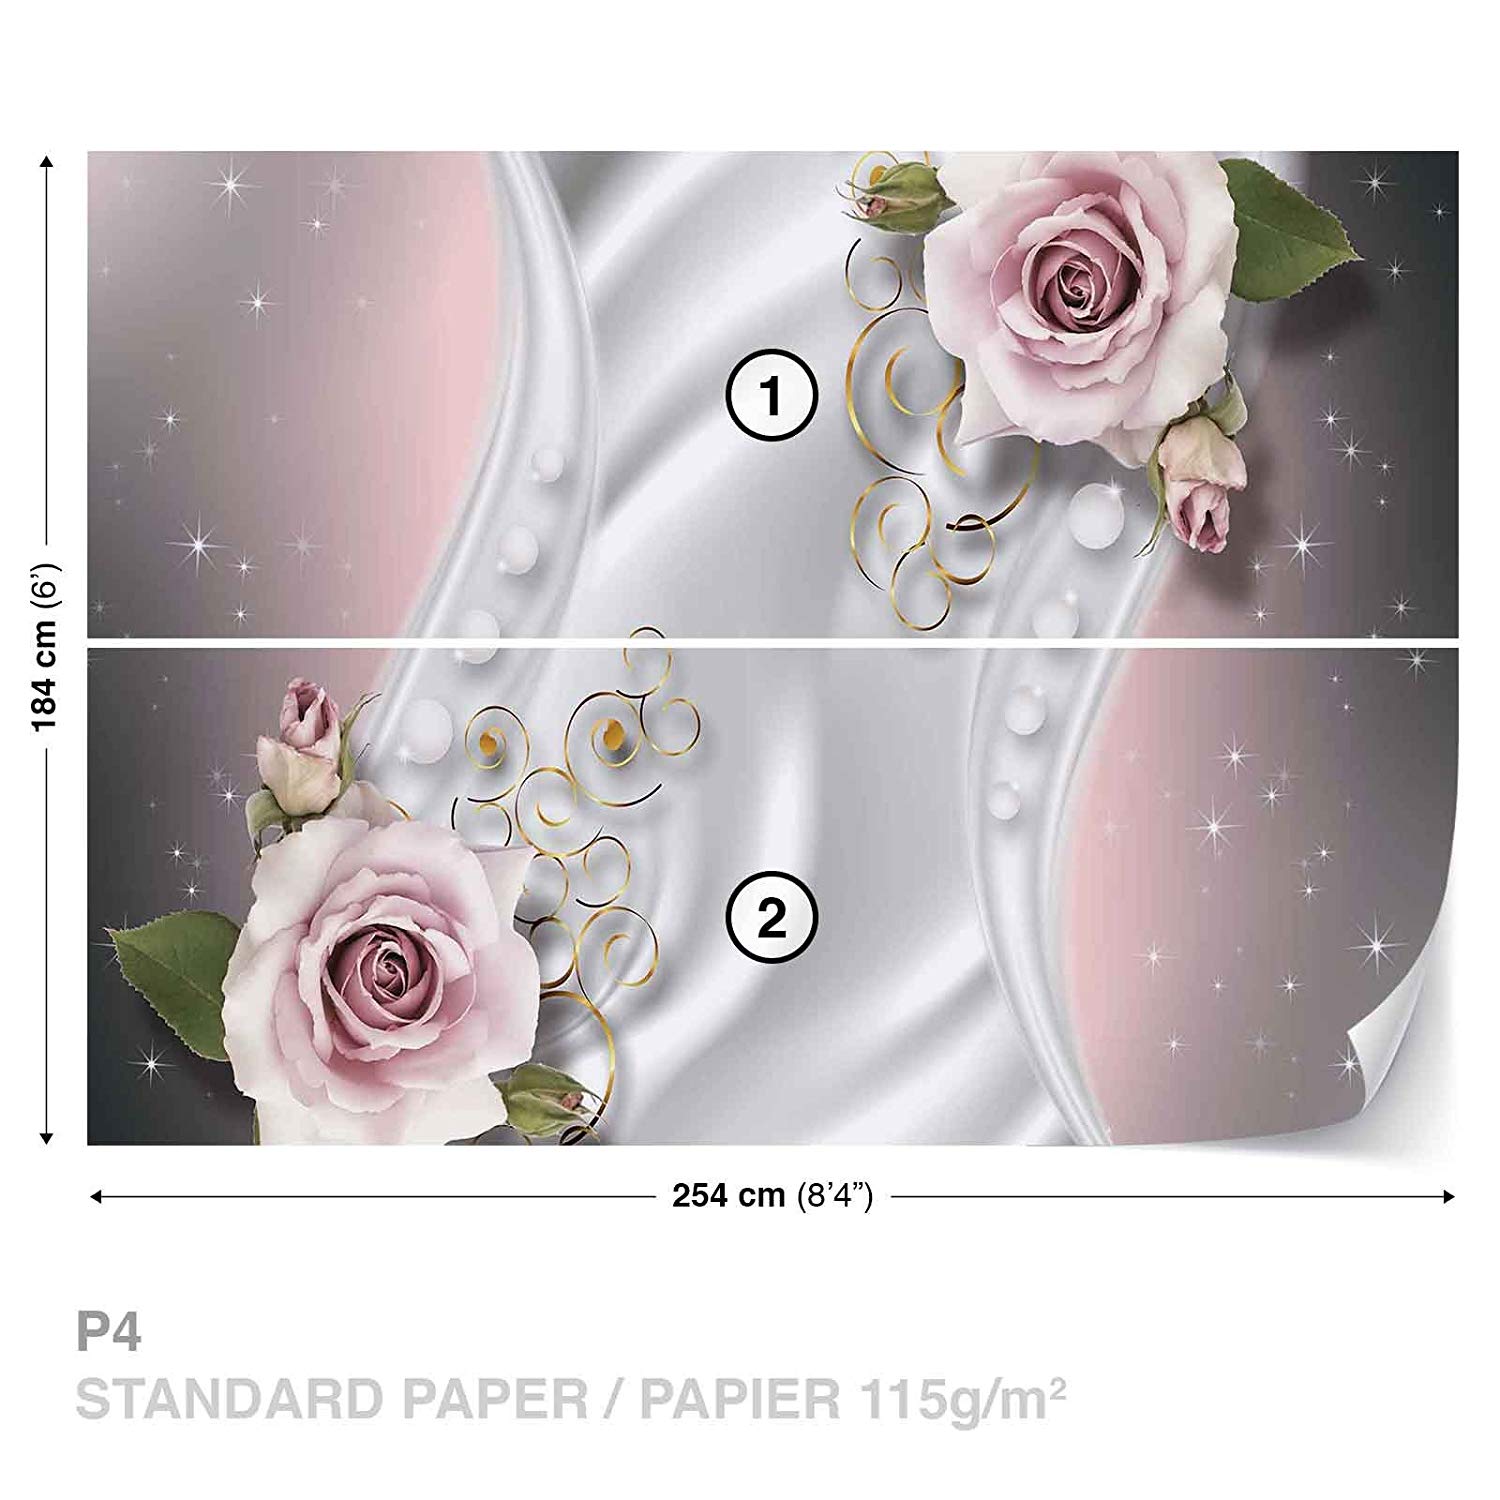 Flowers Rosen Pattern Spheres Abstract Wall Mural Photo - Garden Roses , HD Wallpaper & Backgrounds